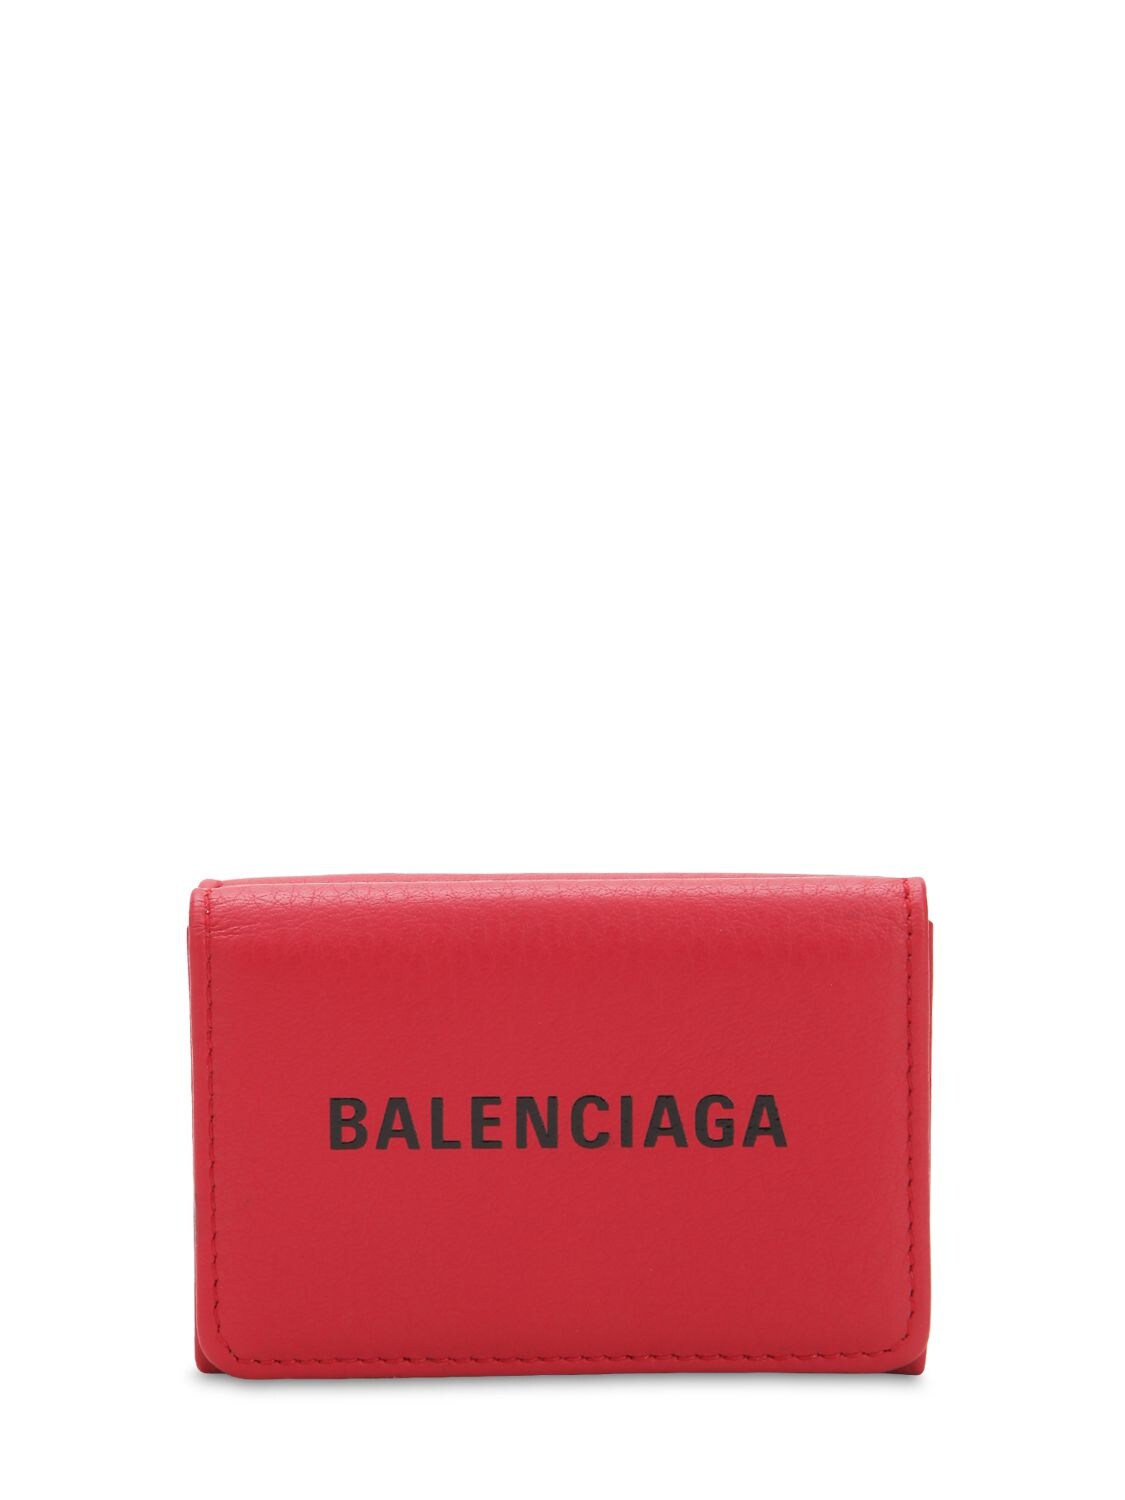 Balenciaga Leather Mini Wallet In Red